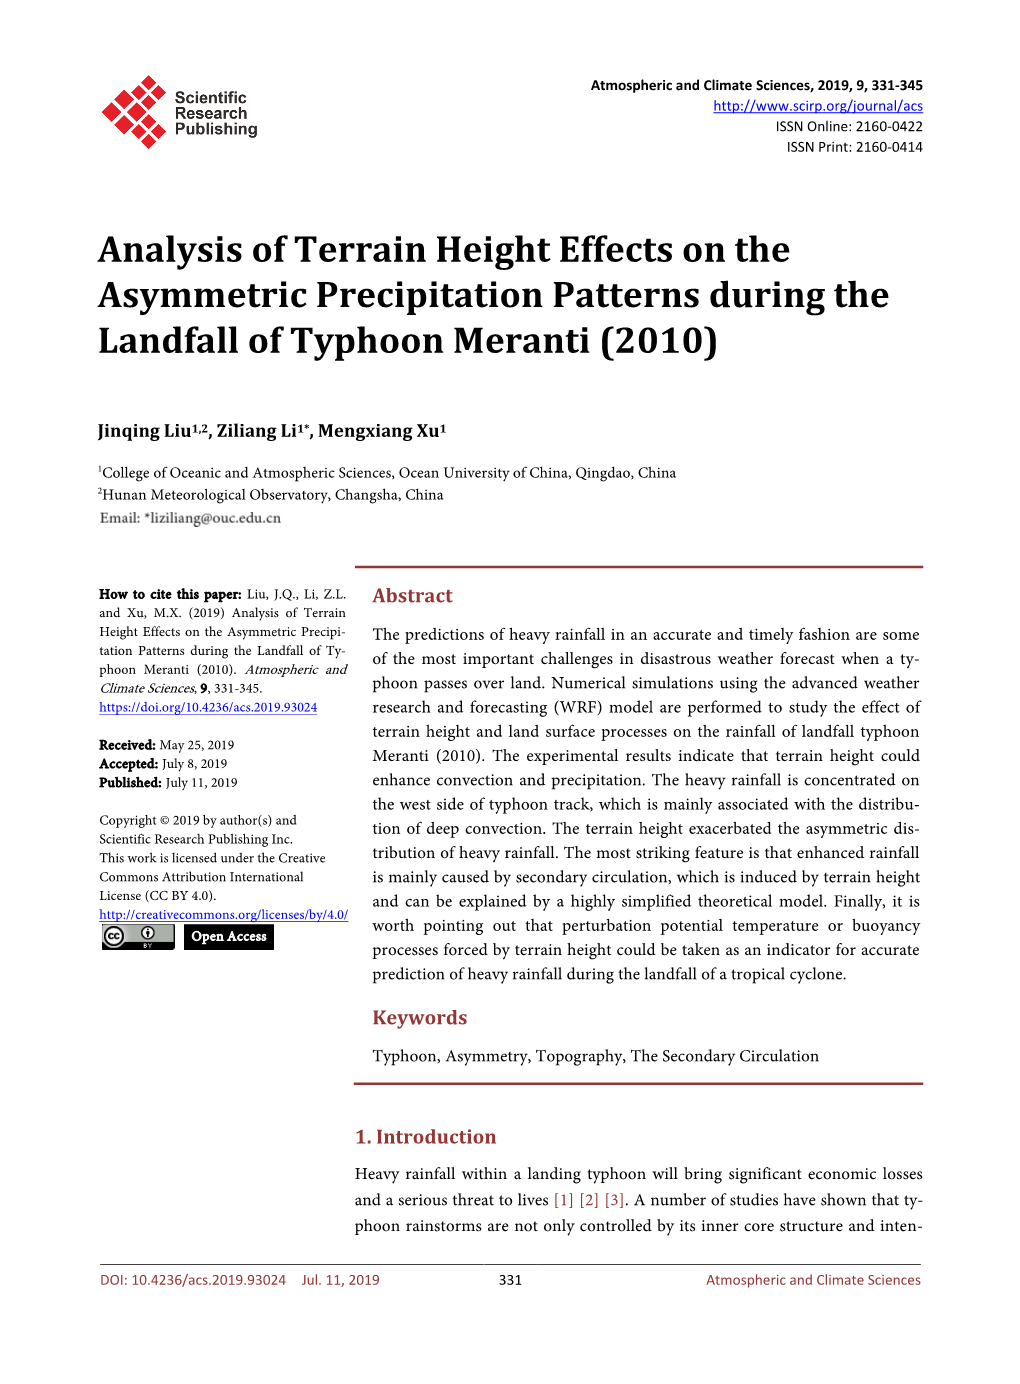 Analysis of Terrain Height Effects on the Asymmetric Precipitation Patterns During the Landfall of Typhoon Meranti (2010)